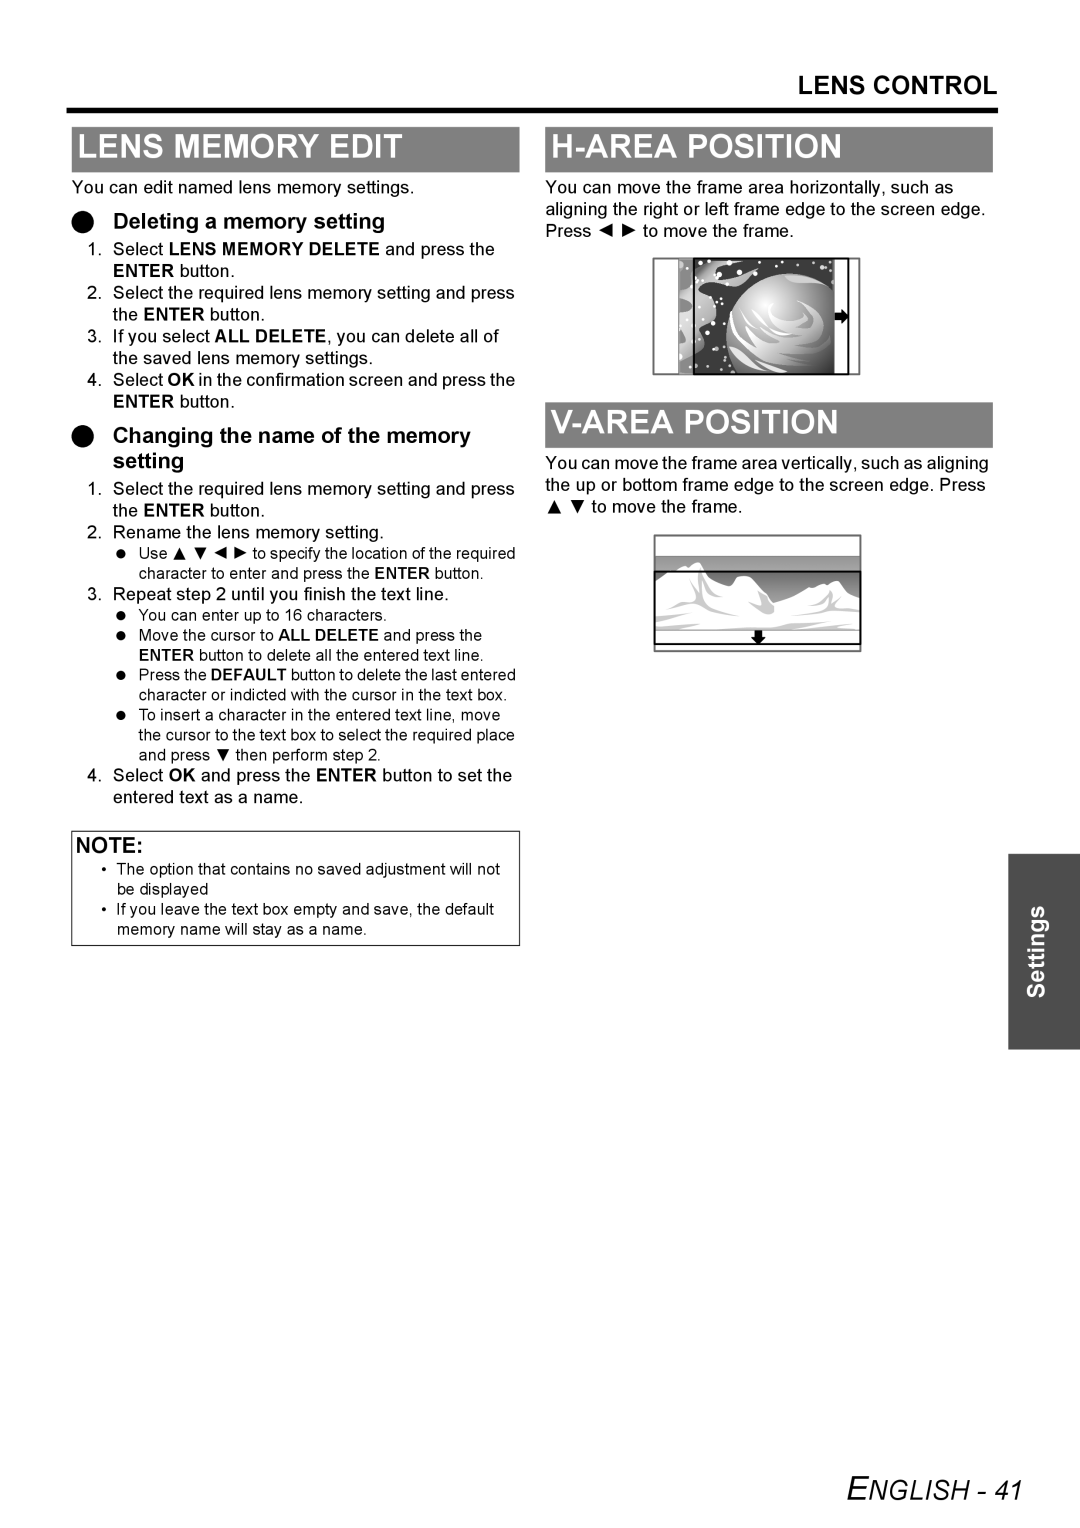 Panasonic PT-AE3000E manual Lens Memory Edit, English, Settings, Lens Control, H-Area Position, V-Area Position 